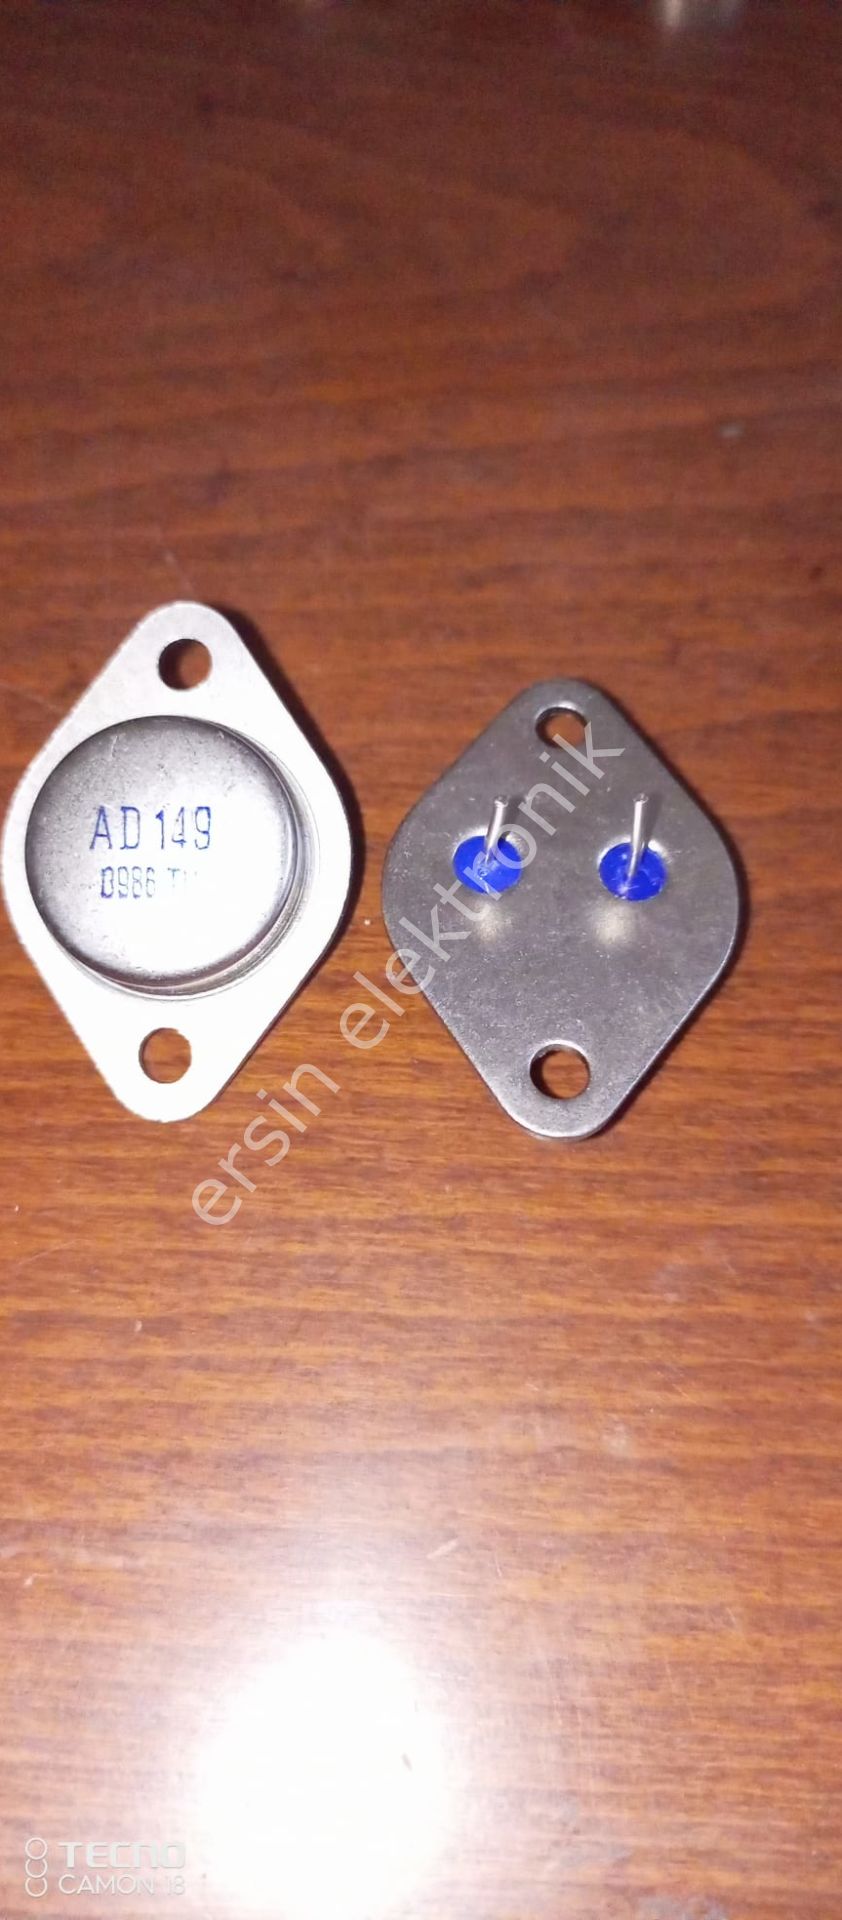 AD149 3.5A 50V PNP Germanyum Transistor